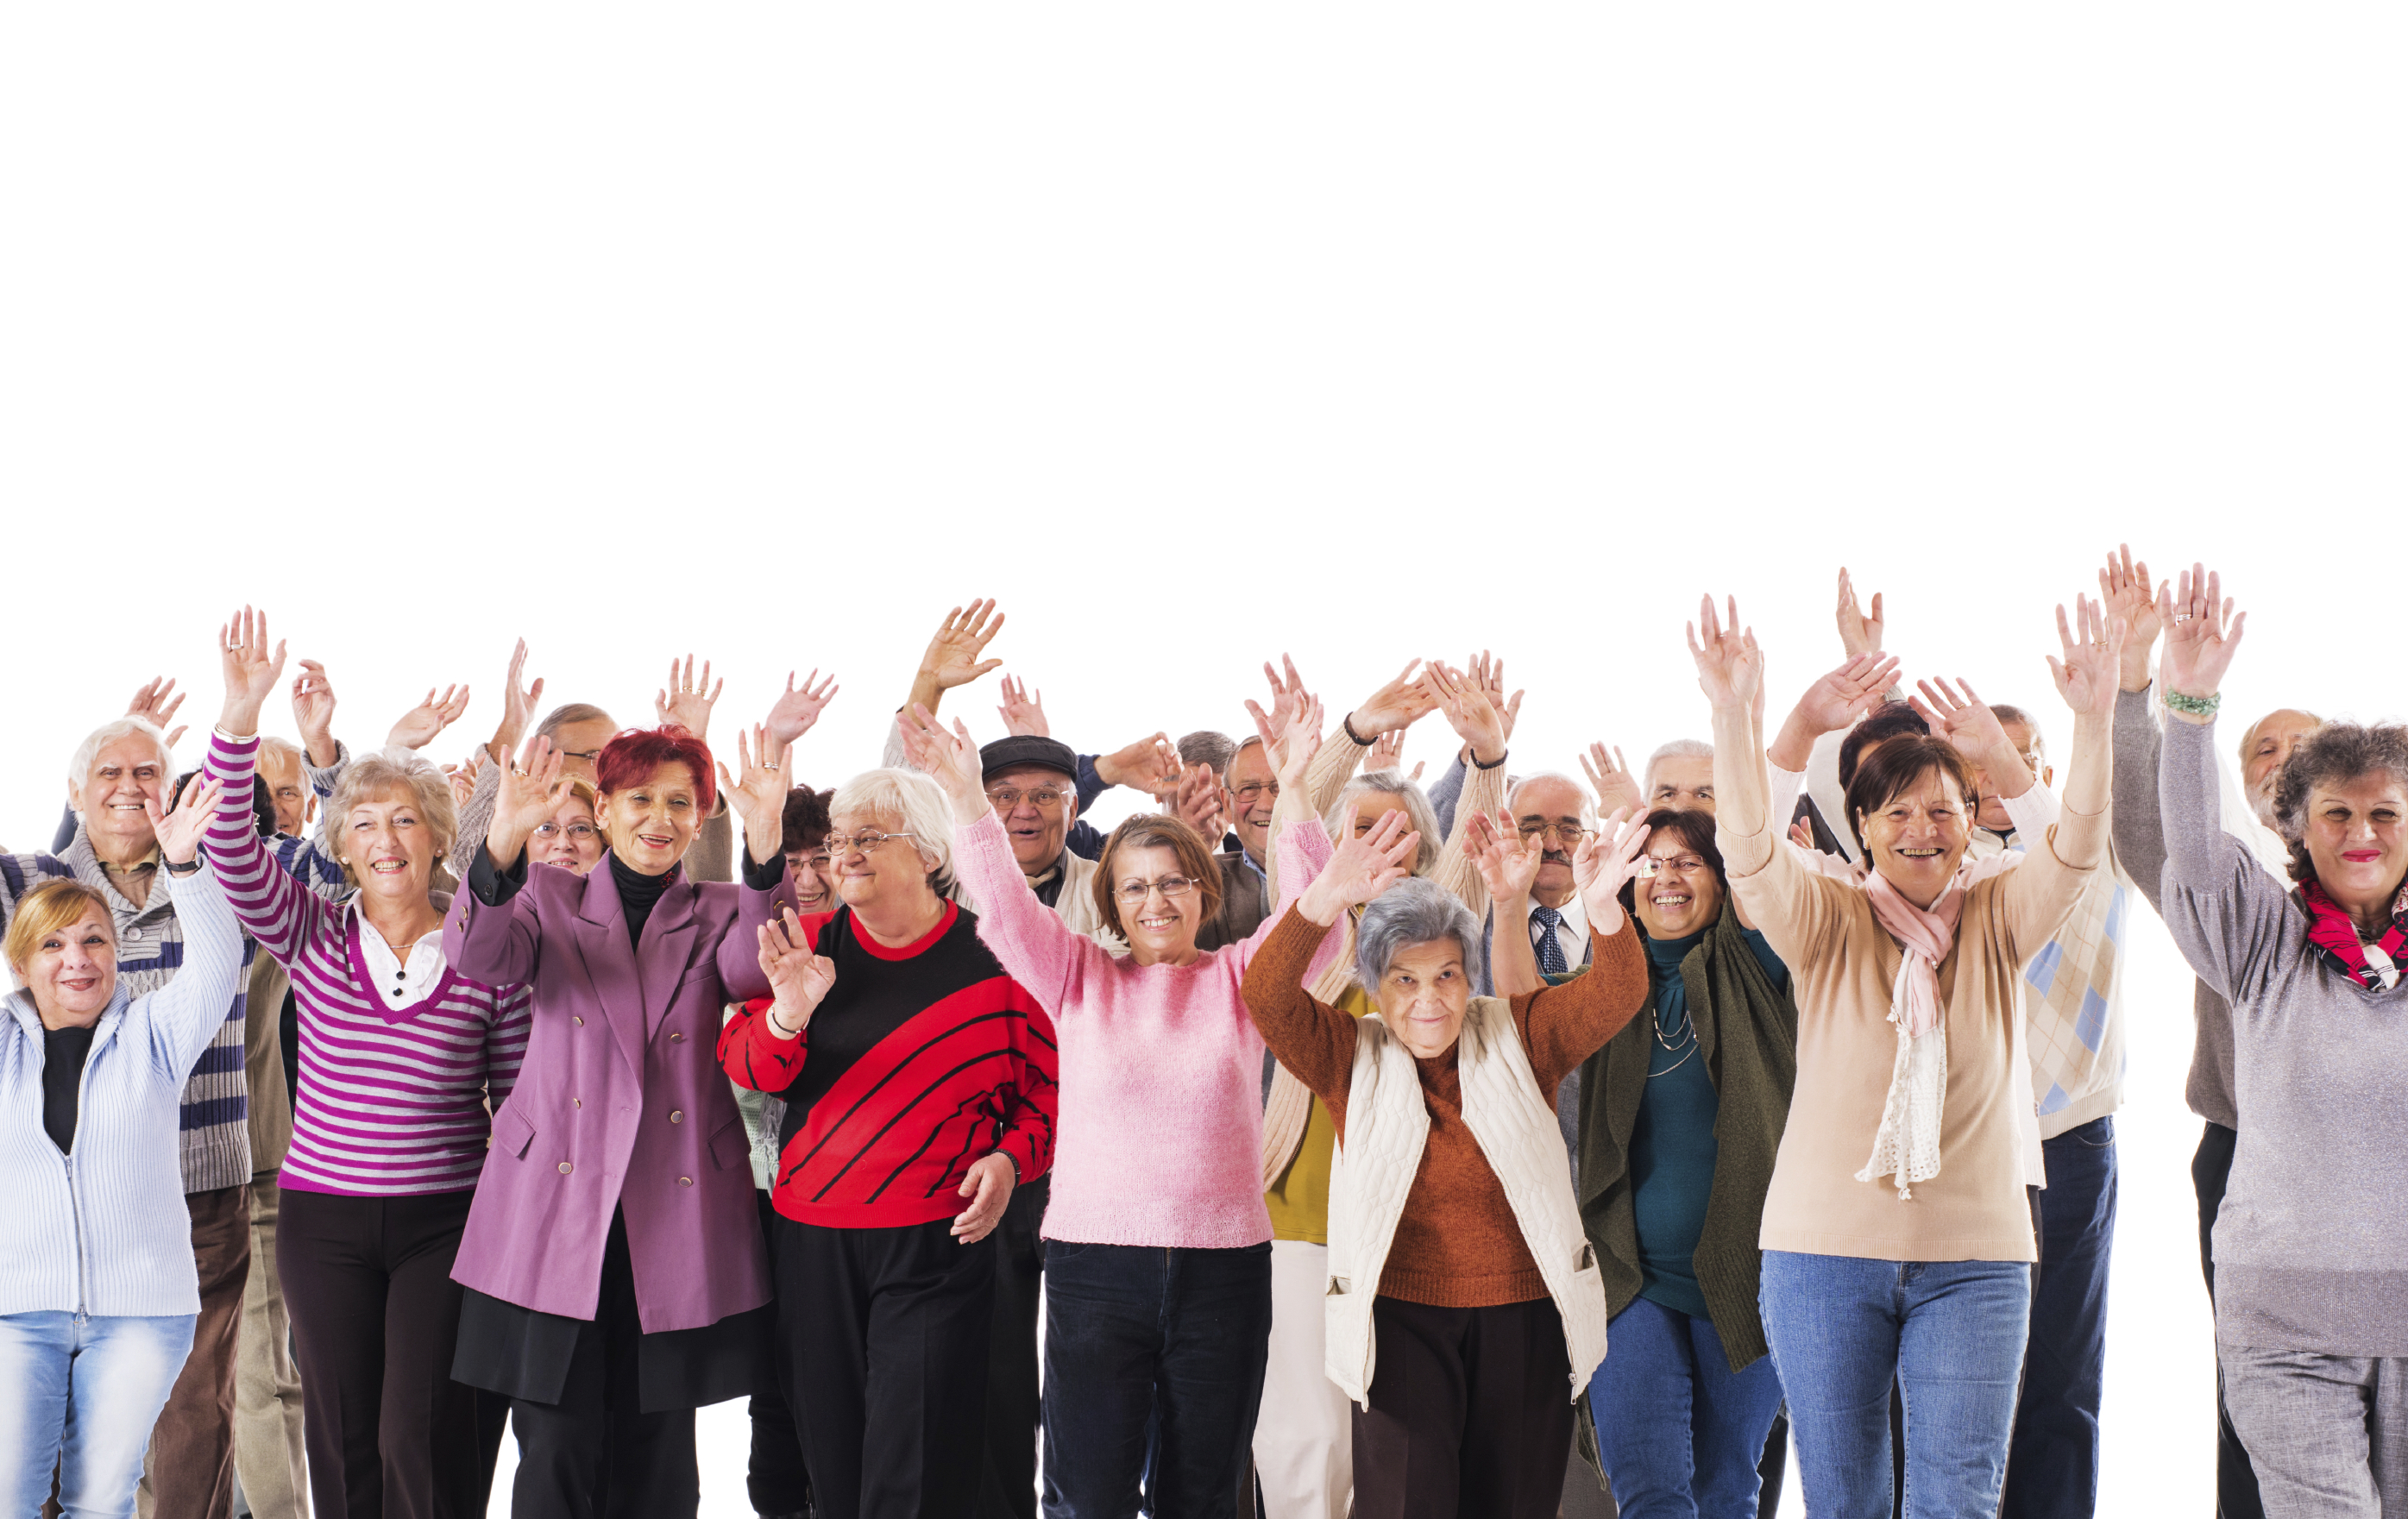 seniors with their arms raised